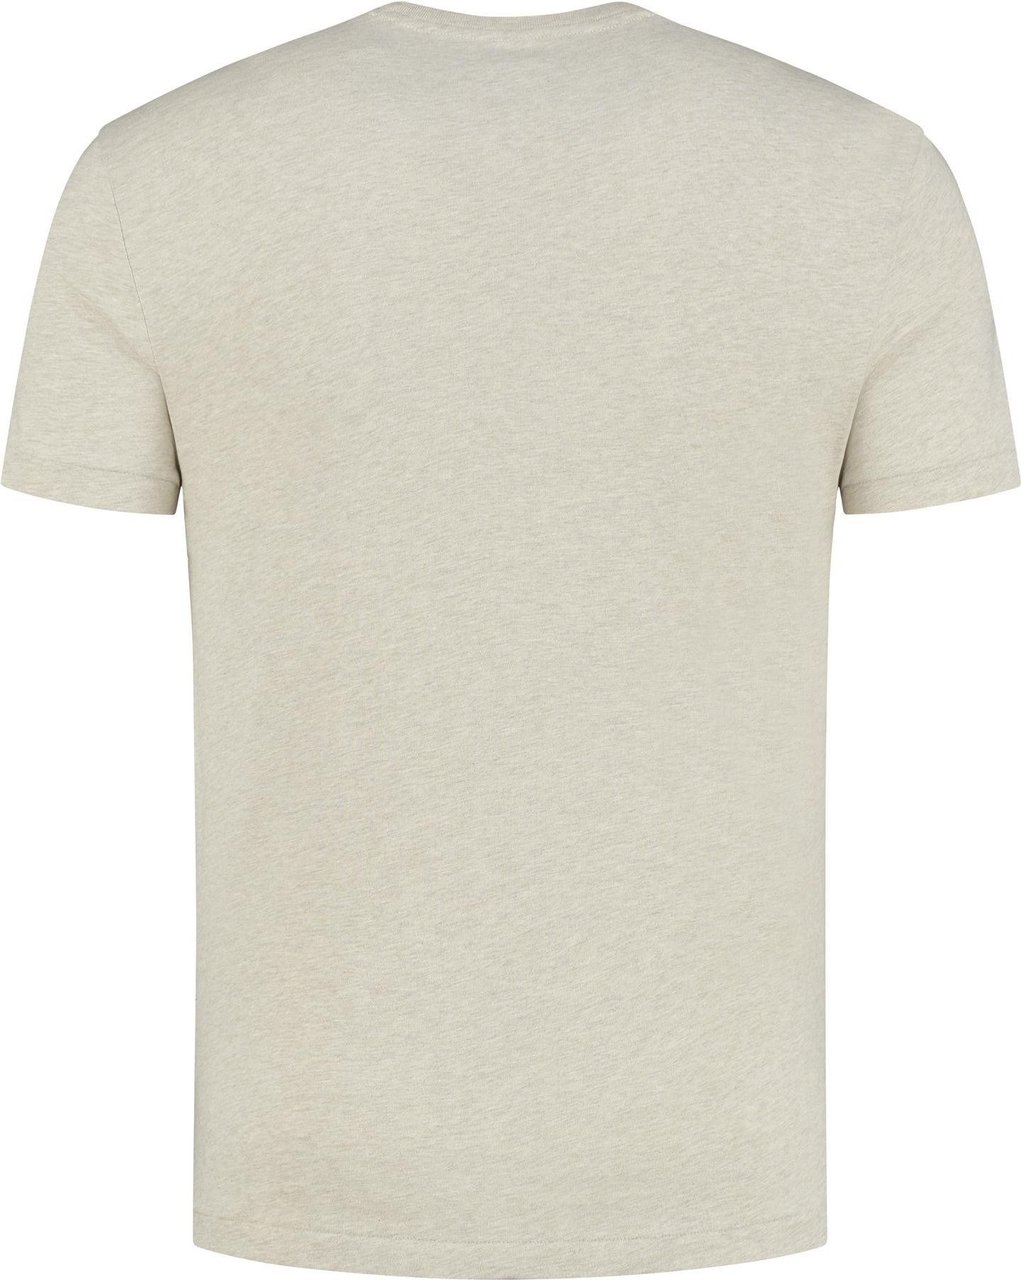 Ralph Lauren T-shirt Beige